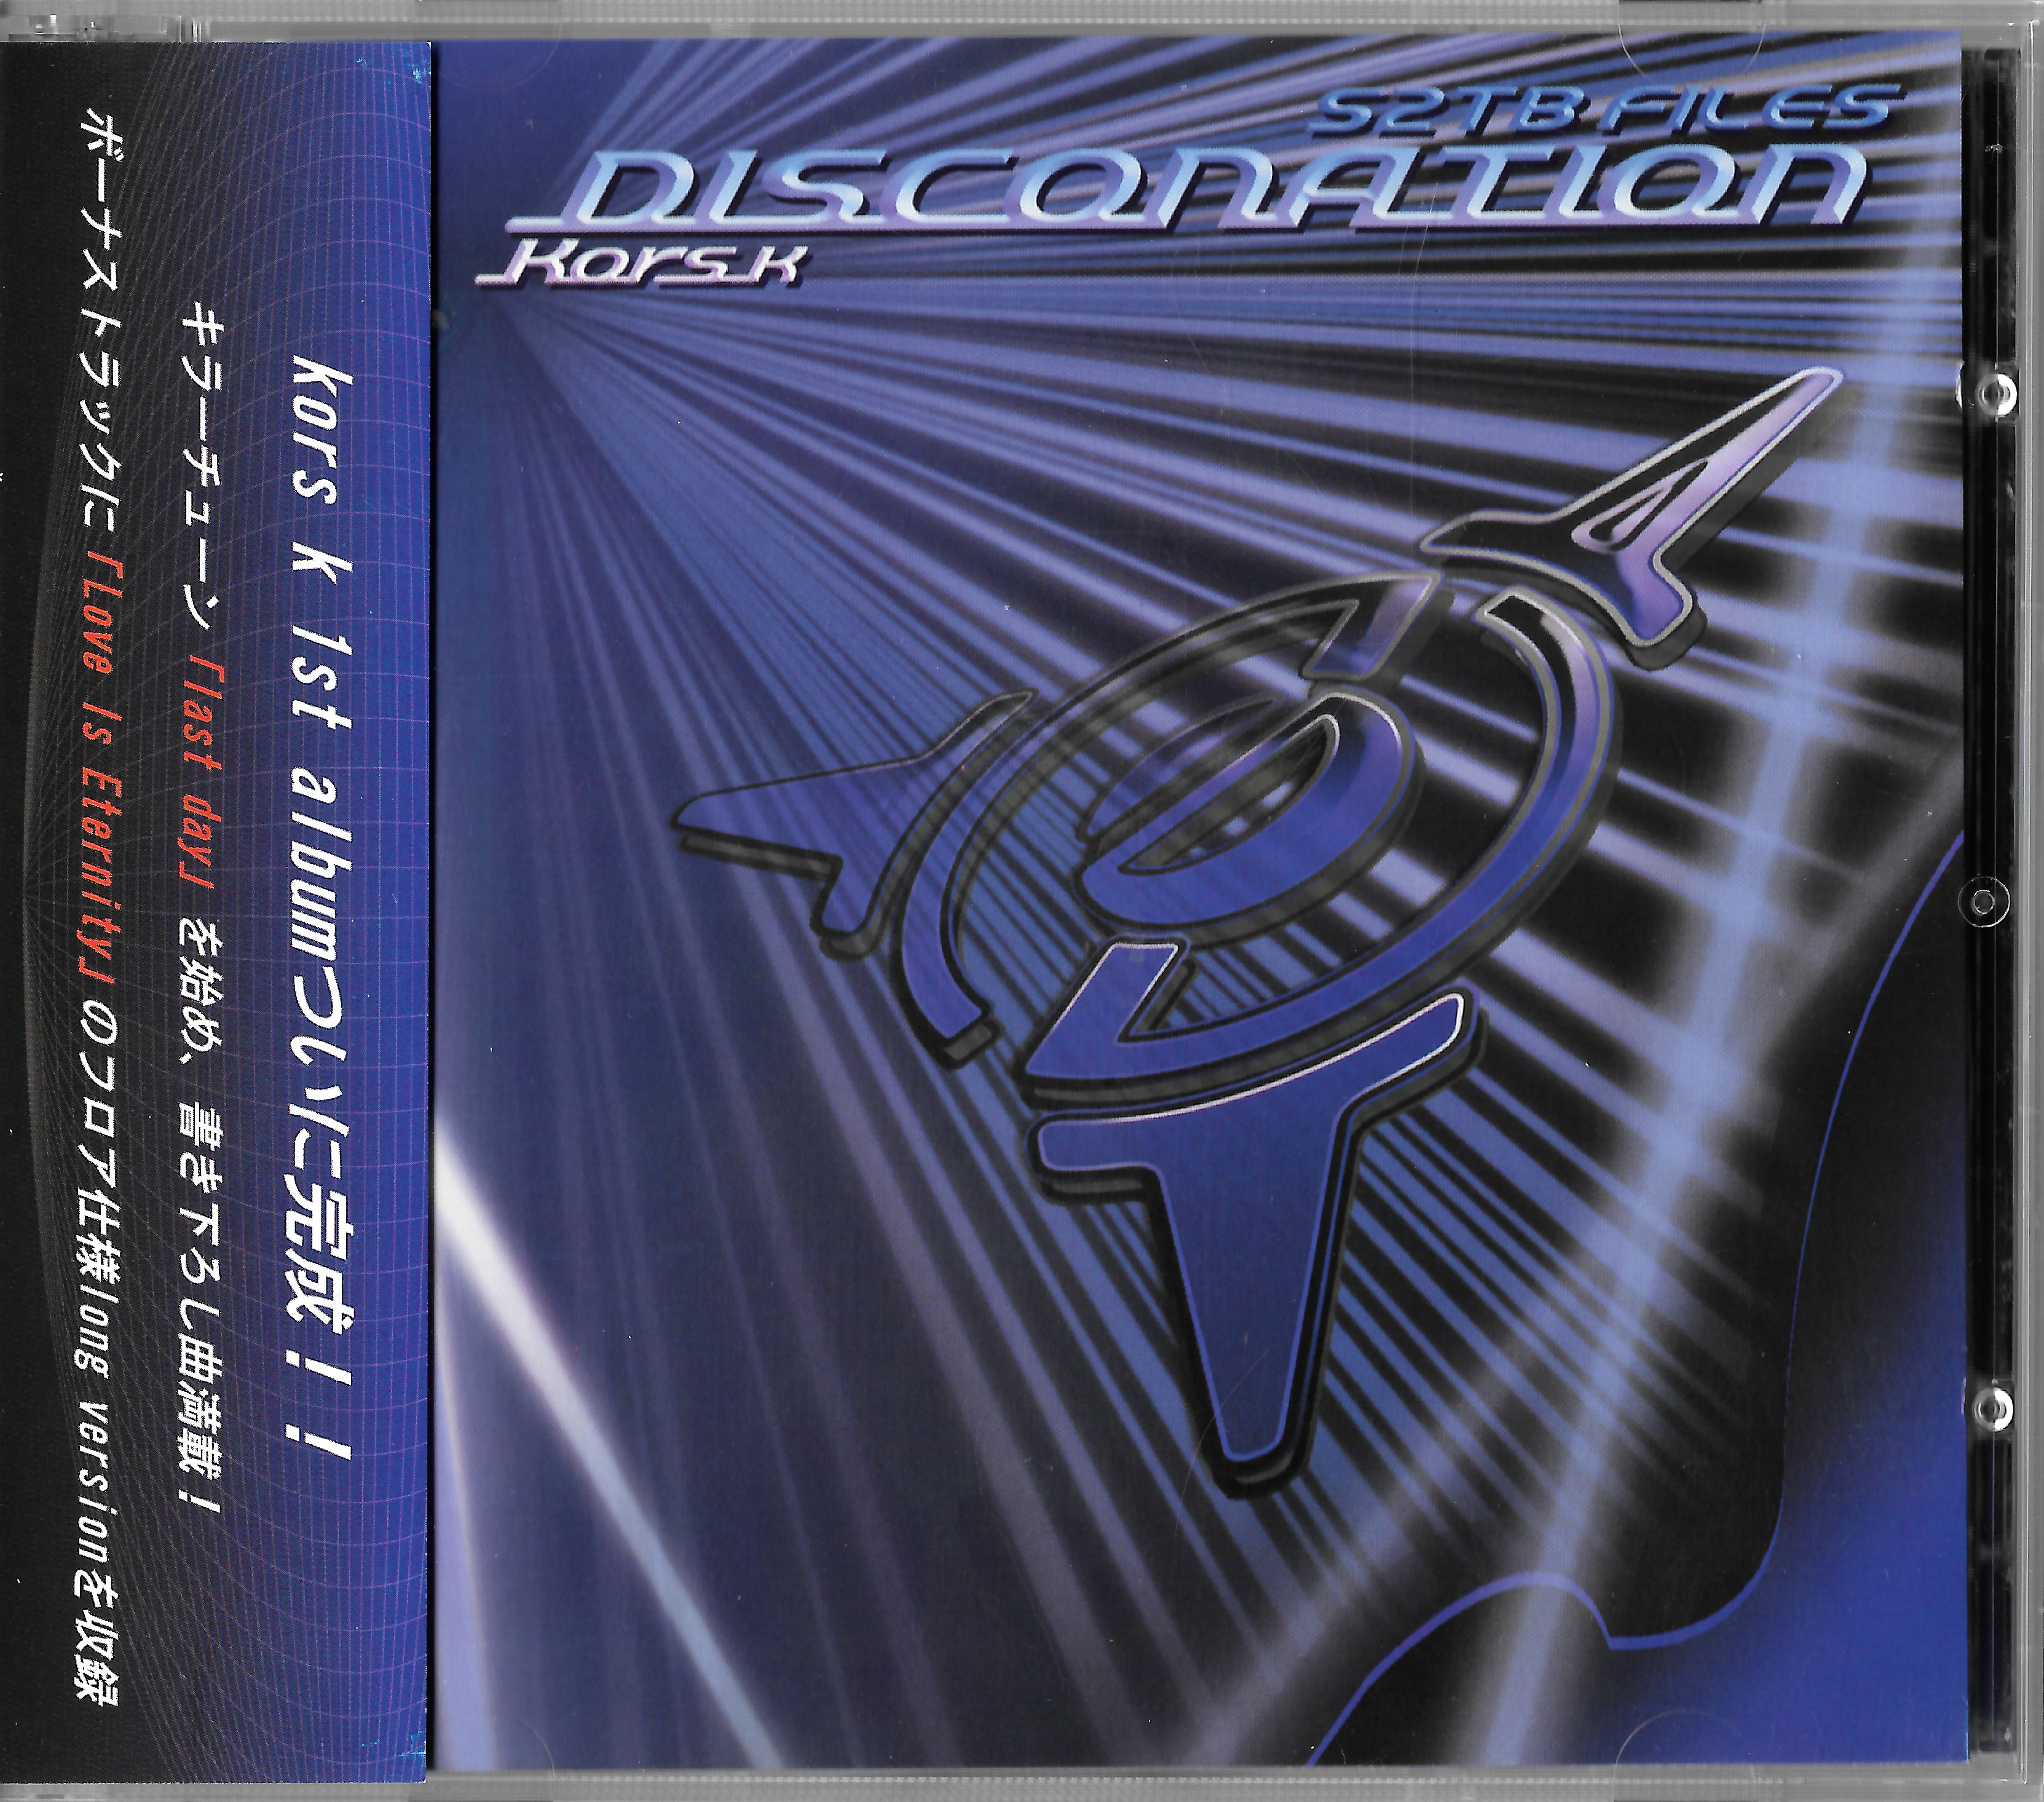 S2TB Files: Disconation / kors k (2004) MP3 - Download S2TB Files 